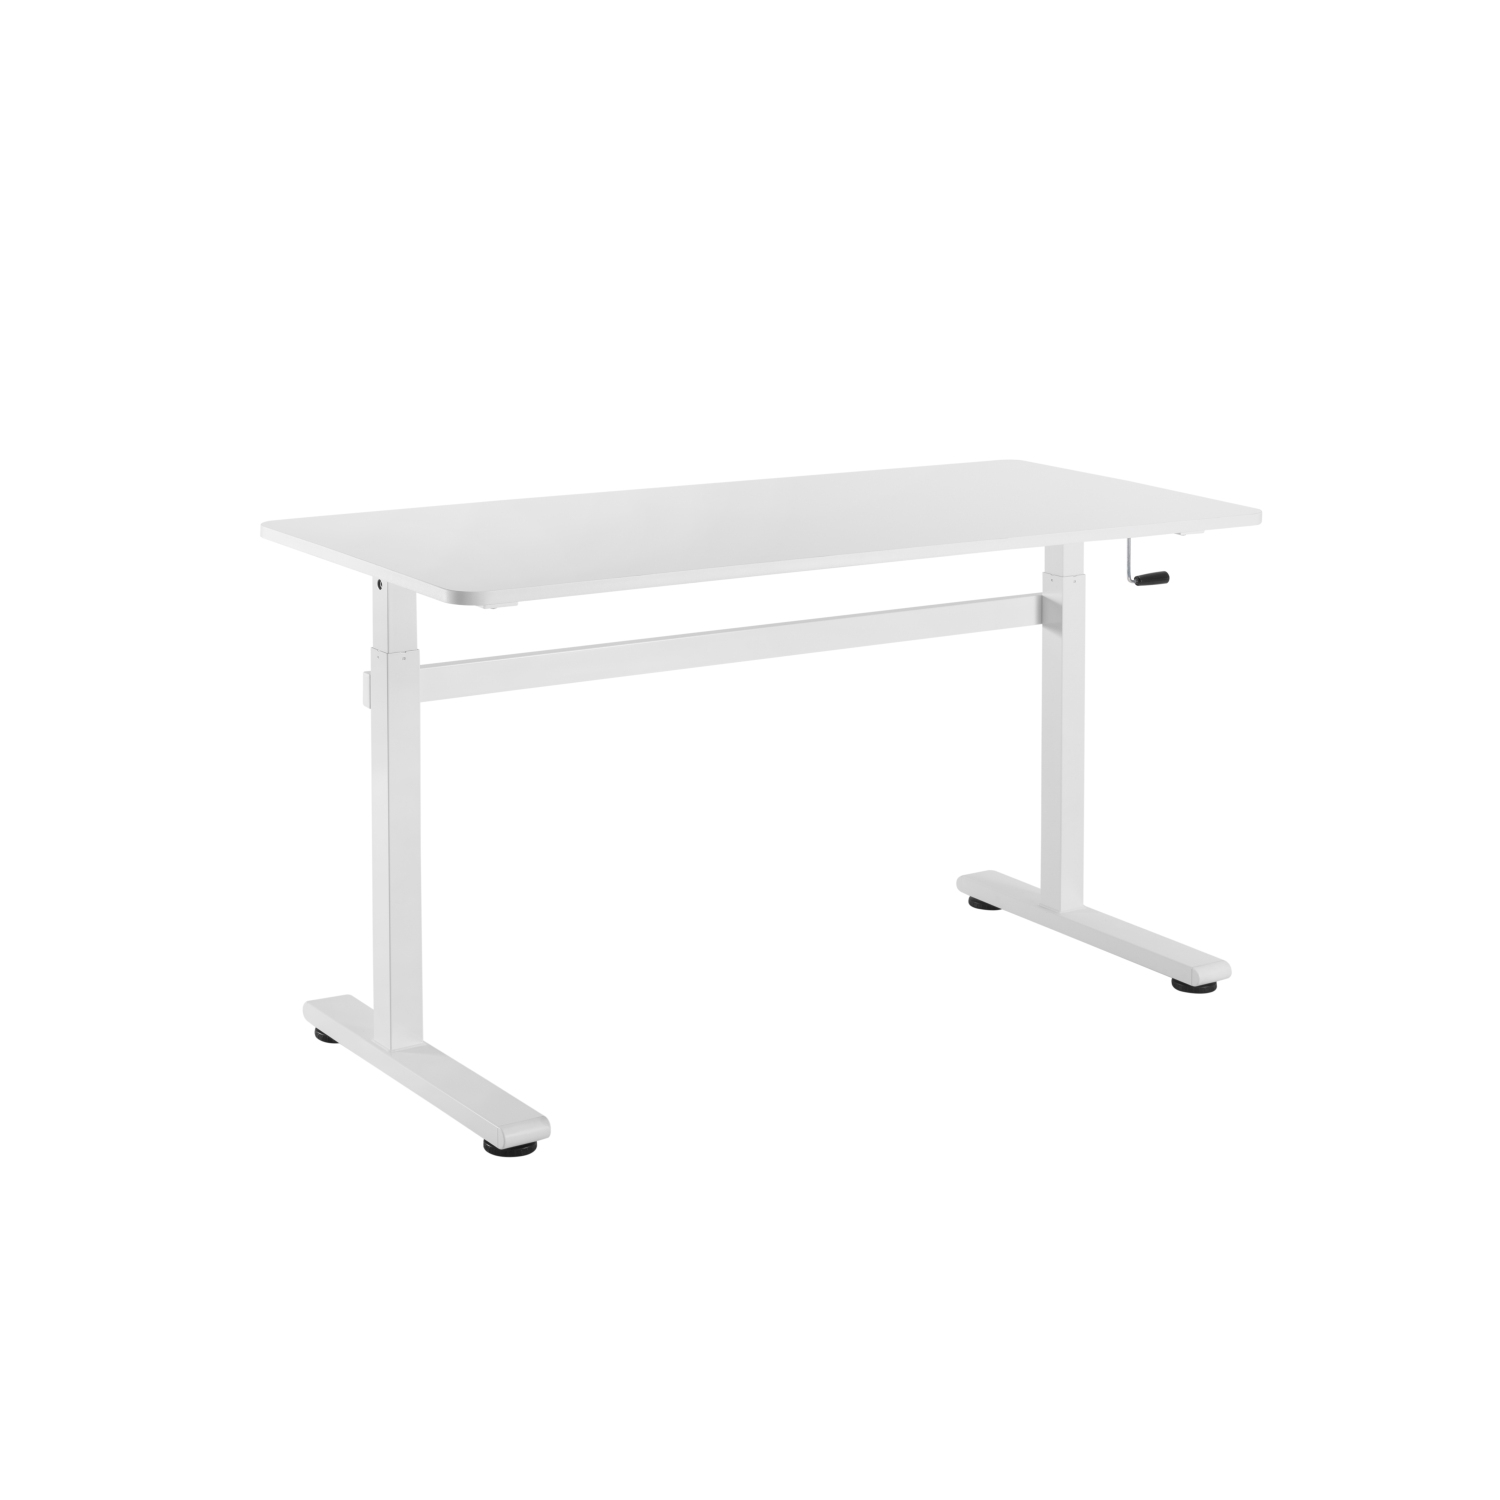 Uplite Hand Crank Stand Up Desk Ergonomic Manual Height Adjustable Standing Table